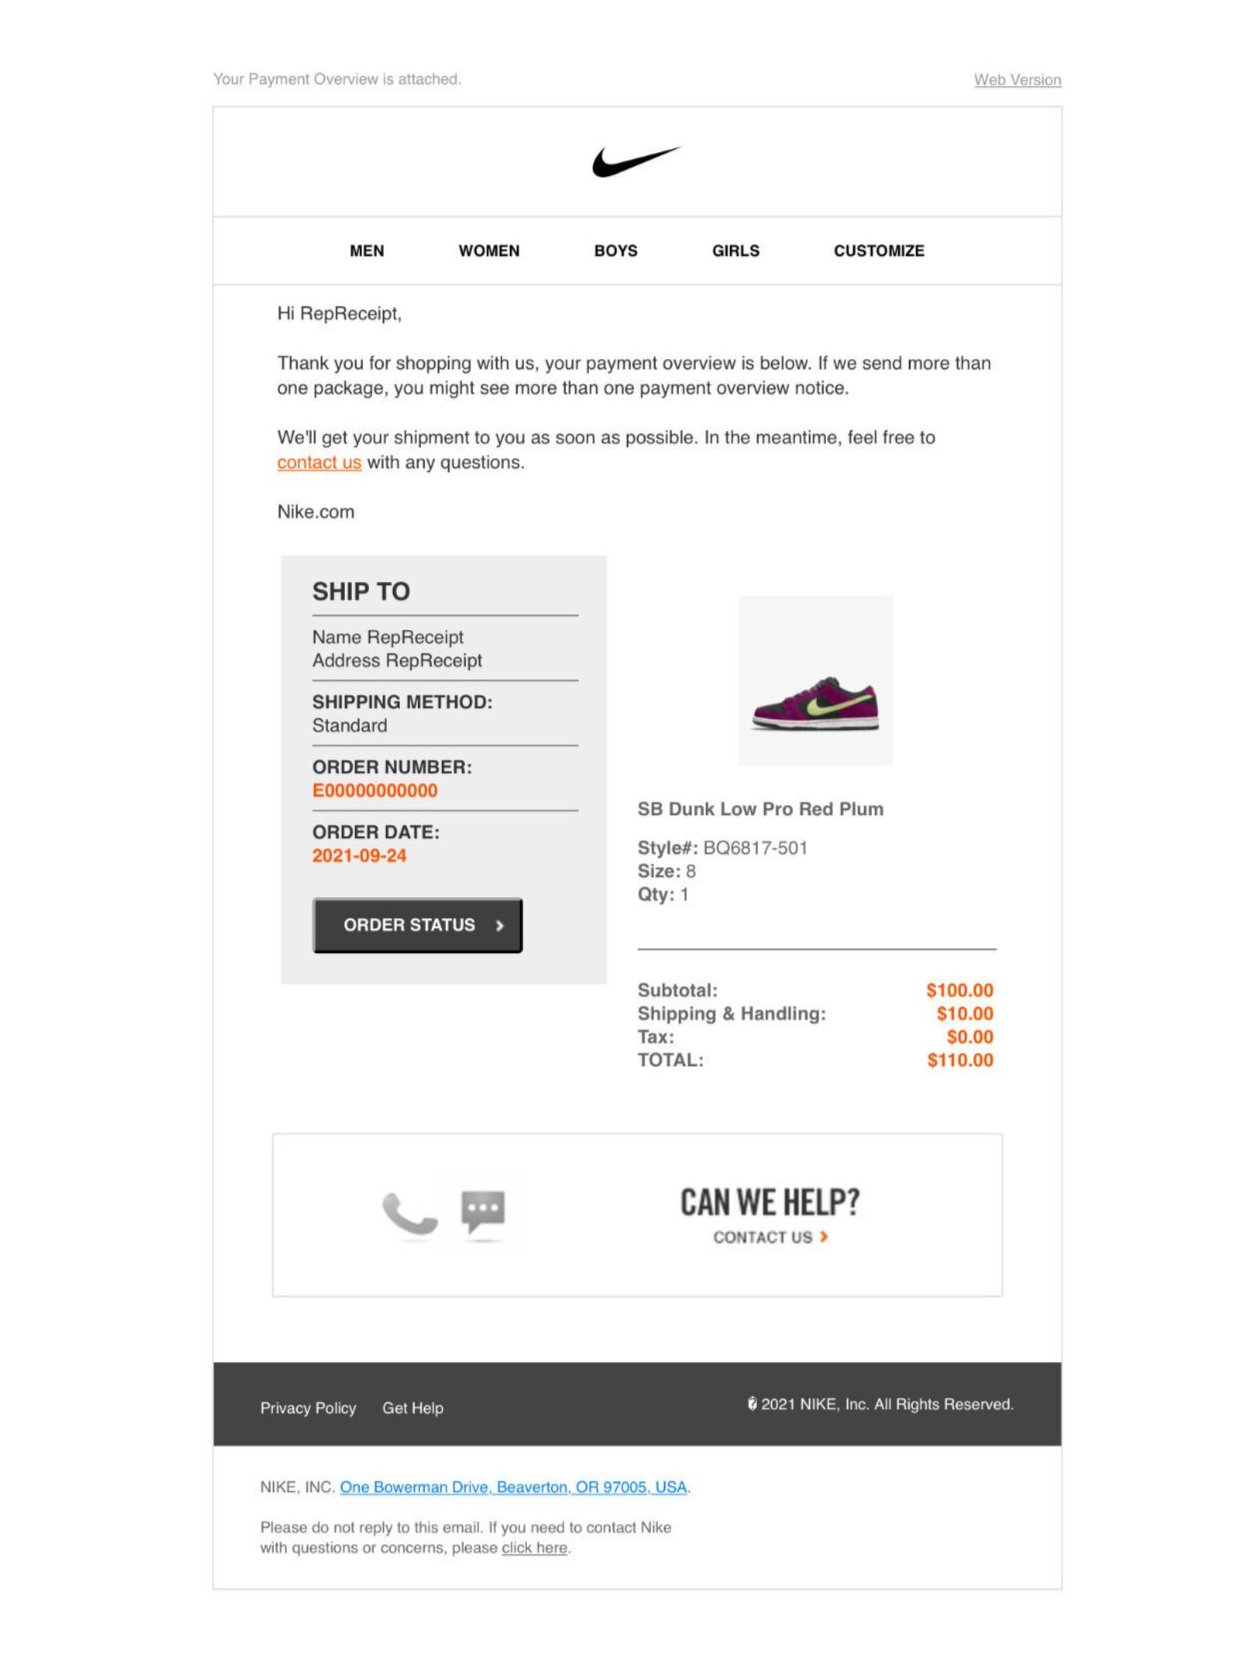 Nike SNKRS email receipt — RepReceipt